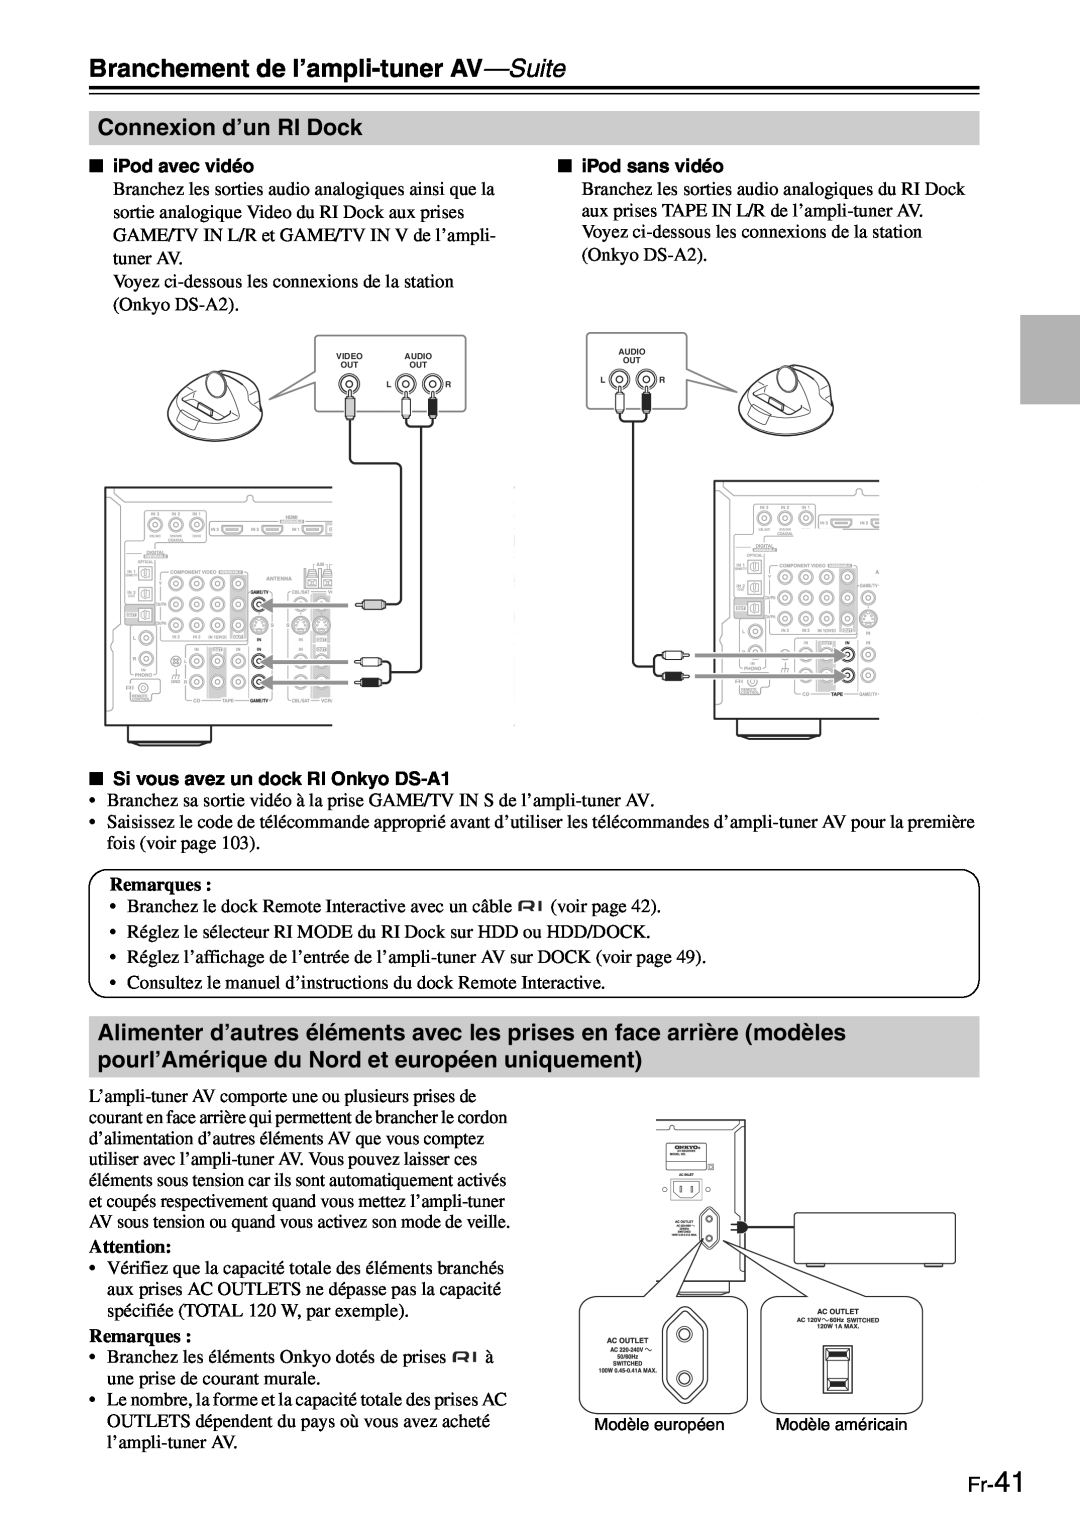 Onkyo TX-SR705 manual Connexion d’un RI Dock, Fr-41, Branchement de l’ampli-tuner AV—Suite, Remarques 